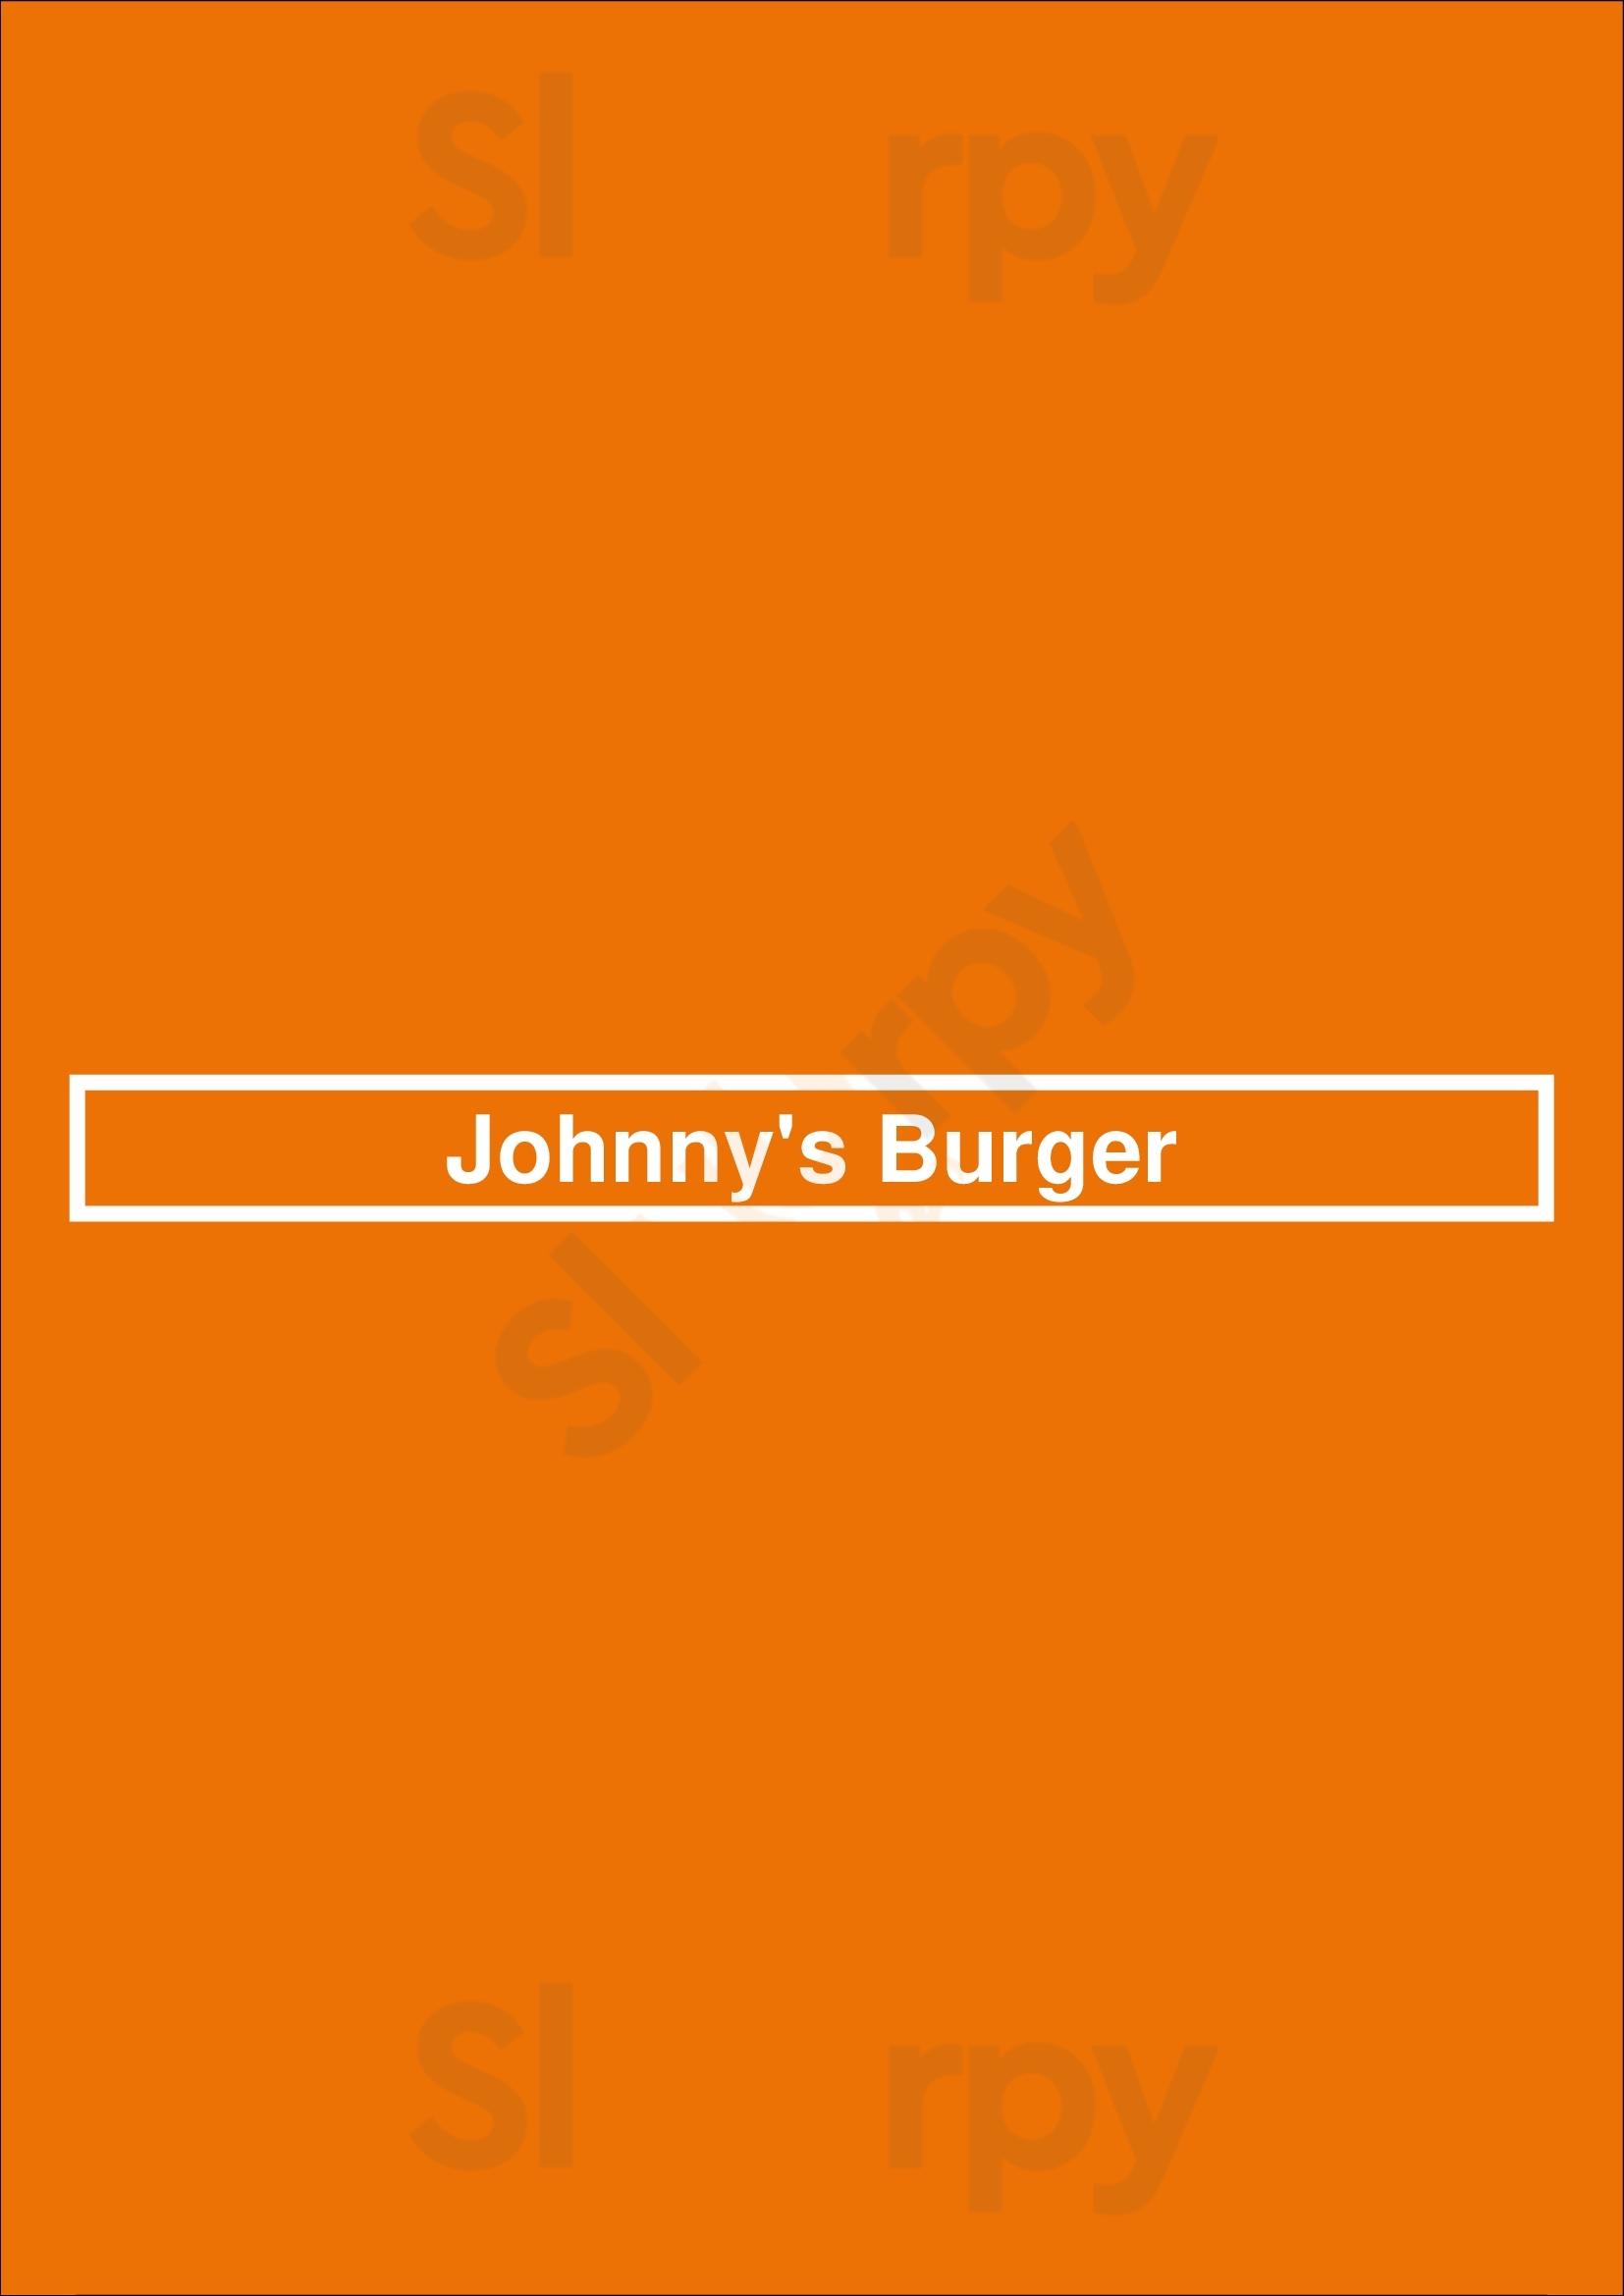 Johnny's Burger Oshawa Menu - 1